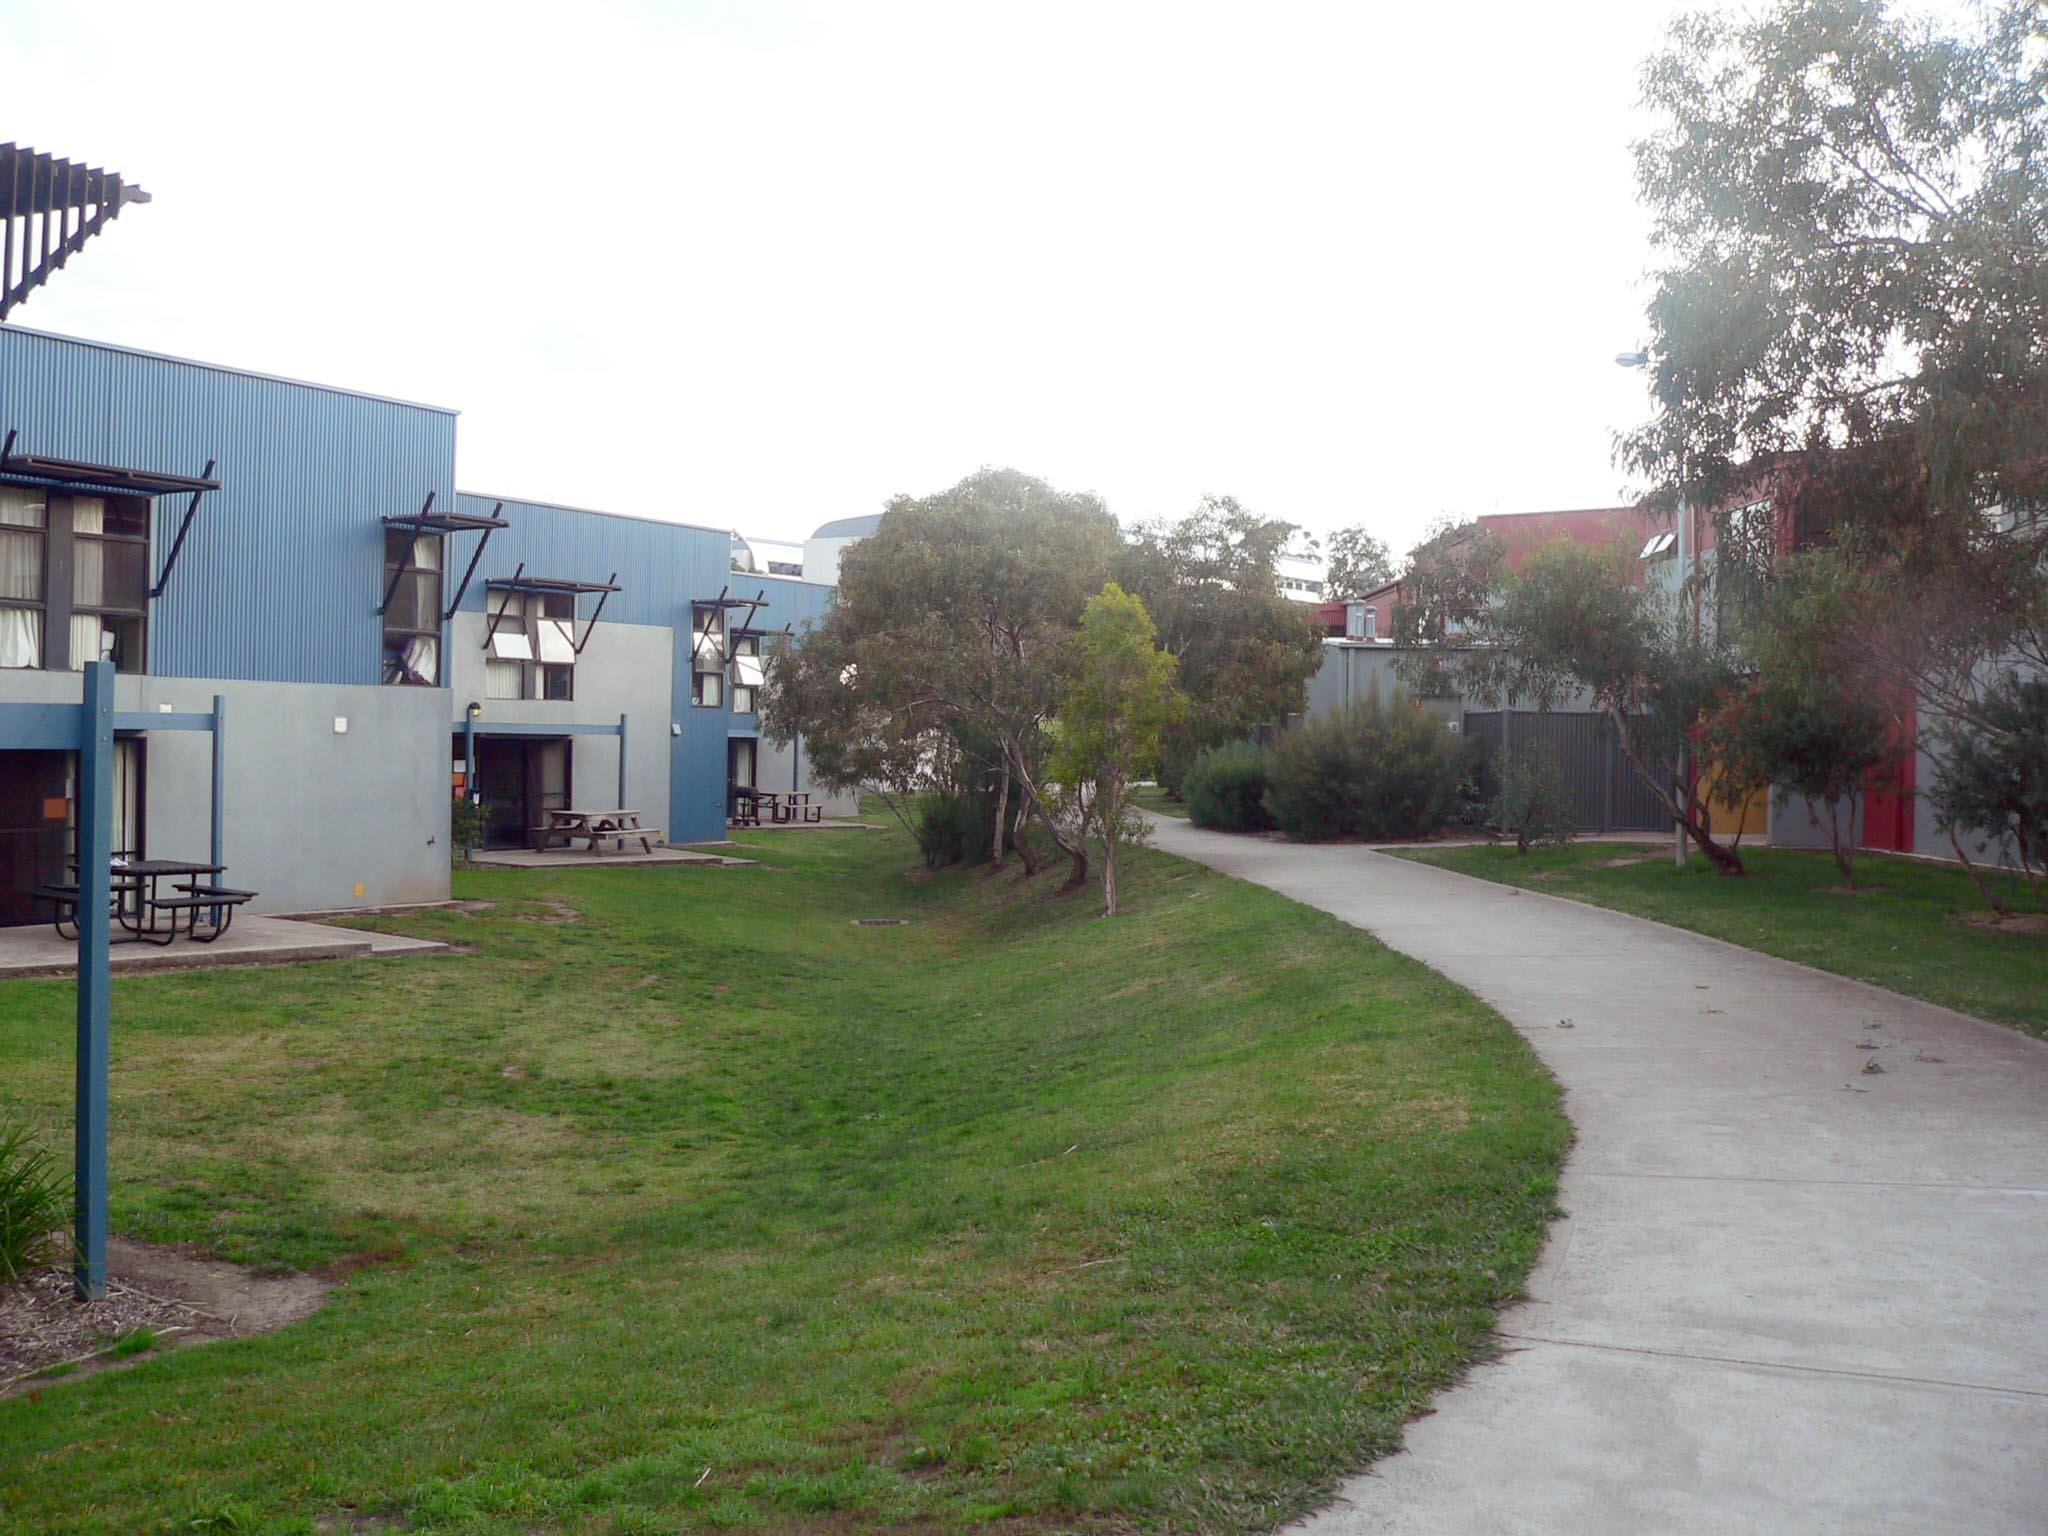 Exterior of student village in Melbourne, Australia.